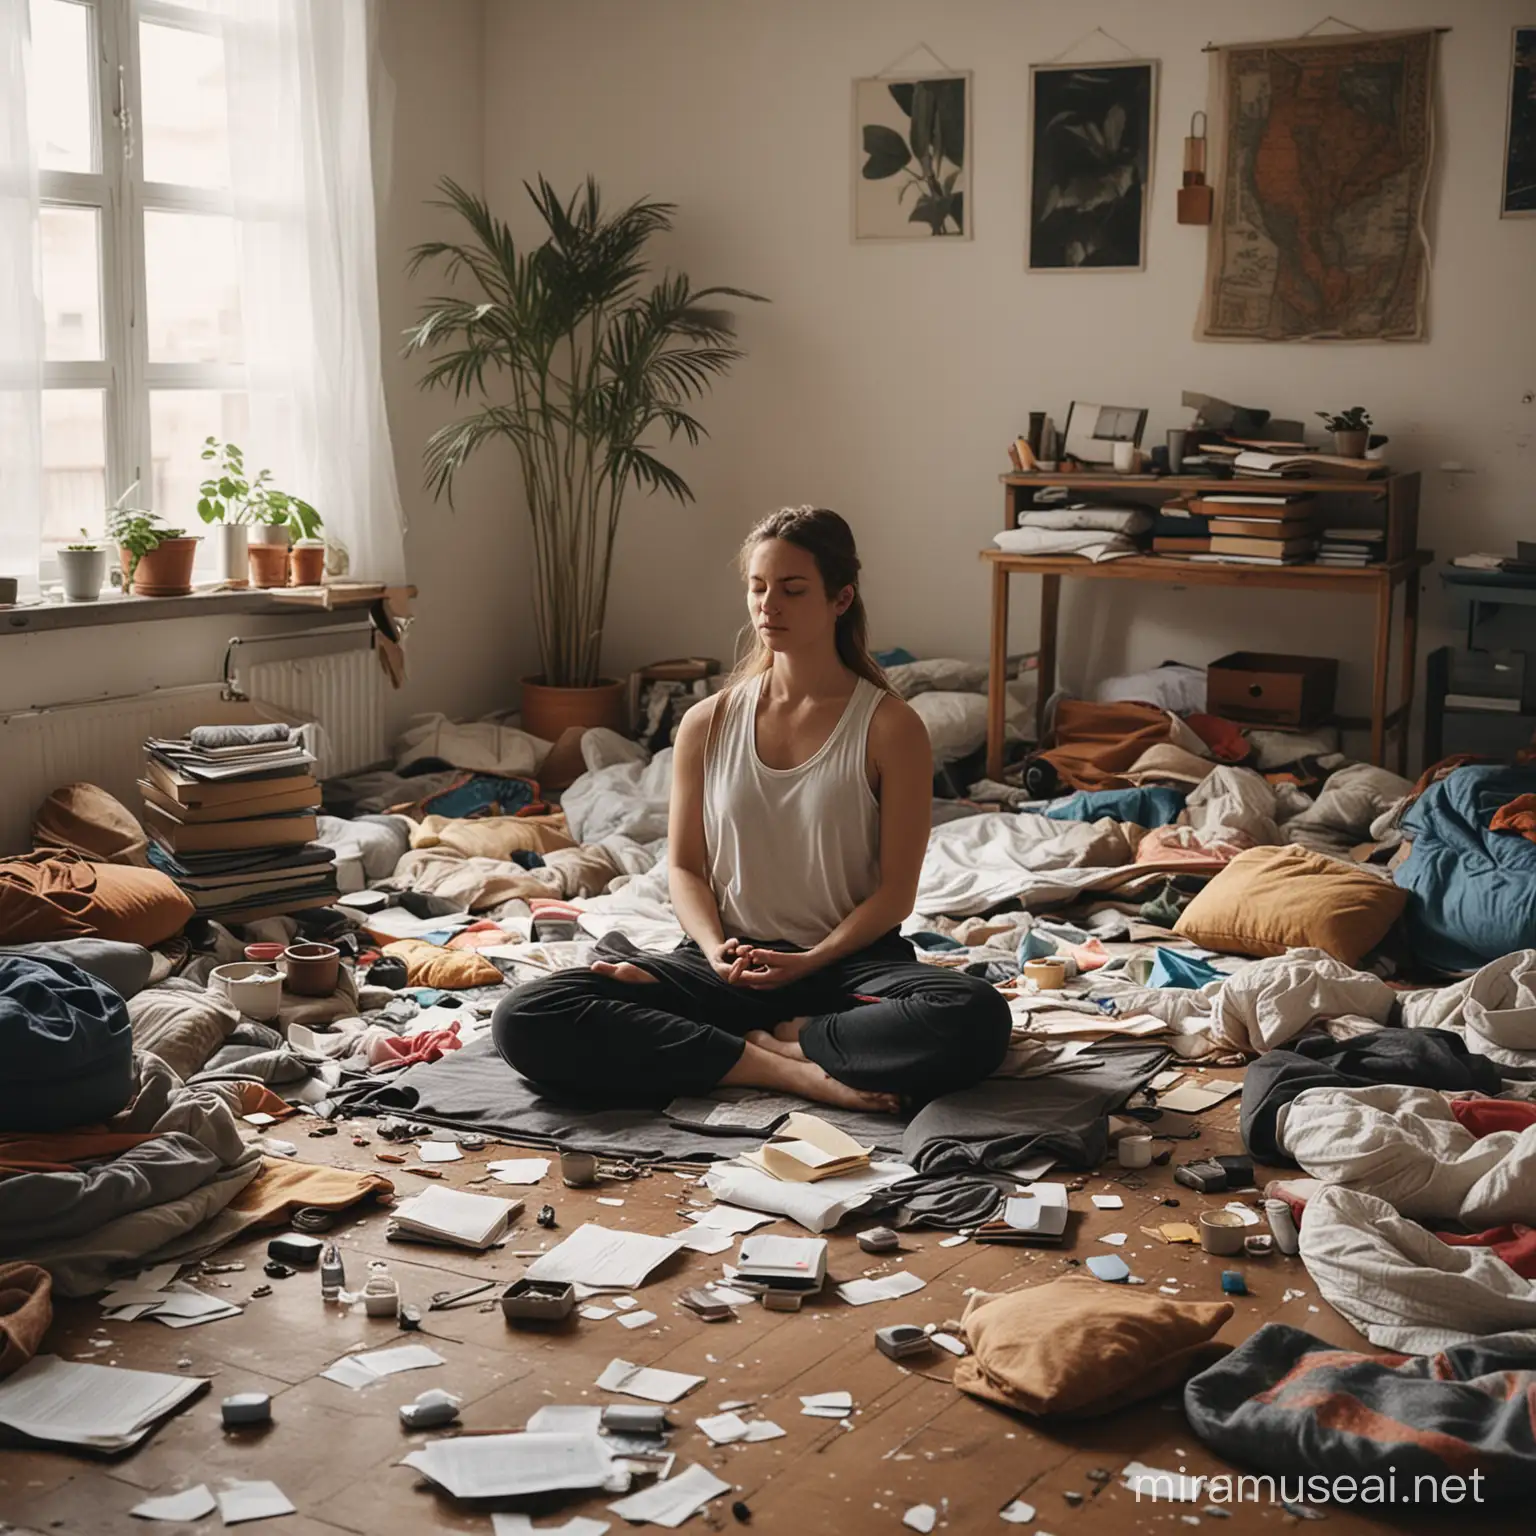 Zen Meditator in Cluttered Urban Space